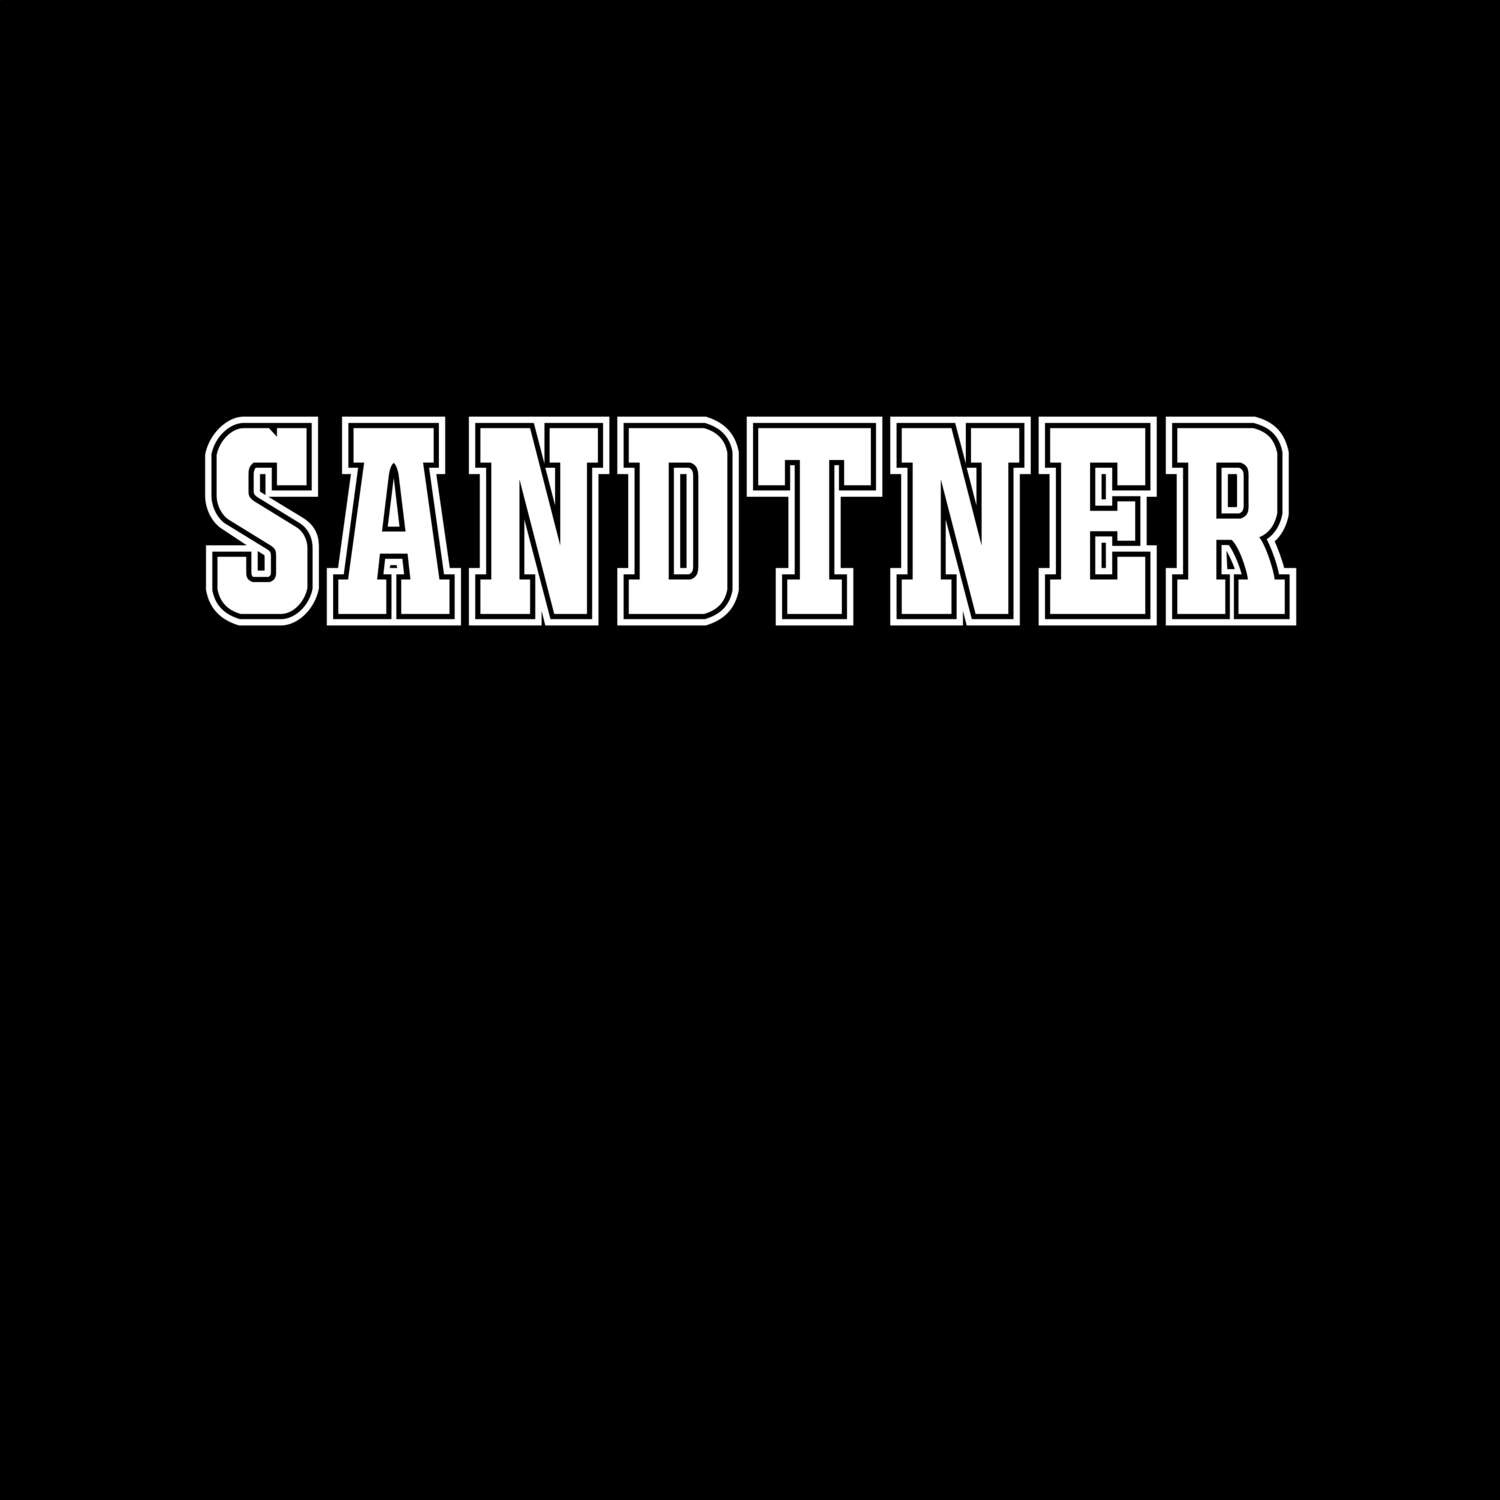 Sandtner T-Shirt »Classic«